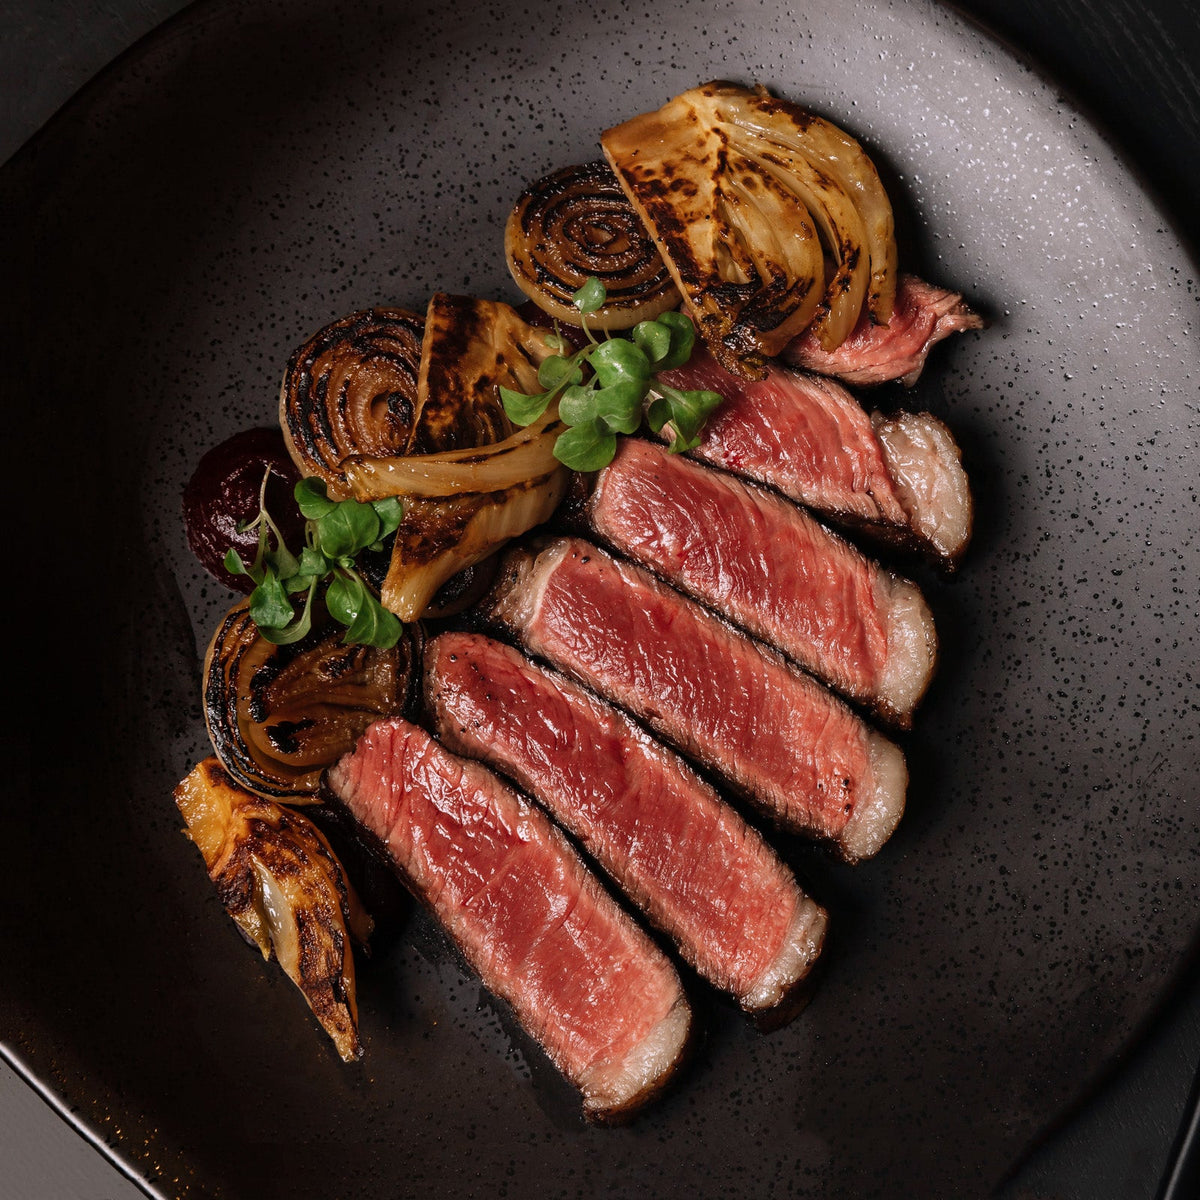 Premium Grain-Fed Beef MB5+ Striploin Steak from Australia 200g 10-Pack (2kg) - Horizon Farms